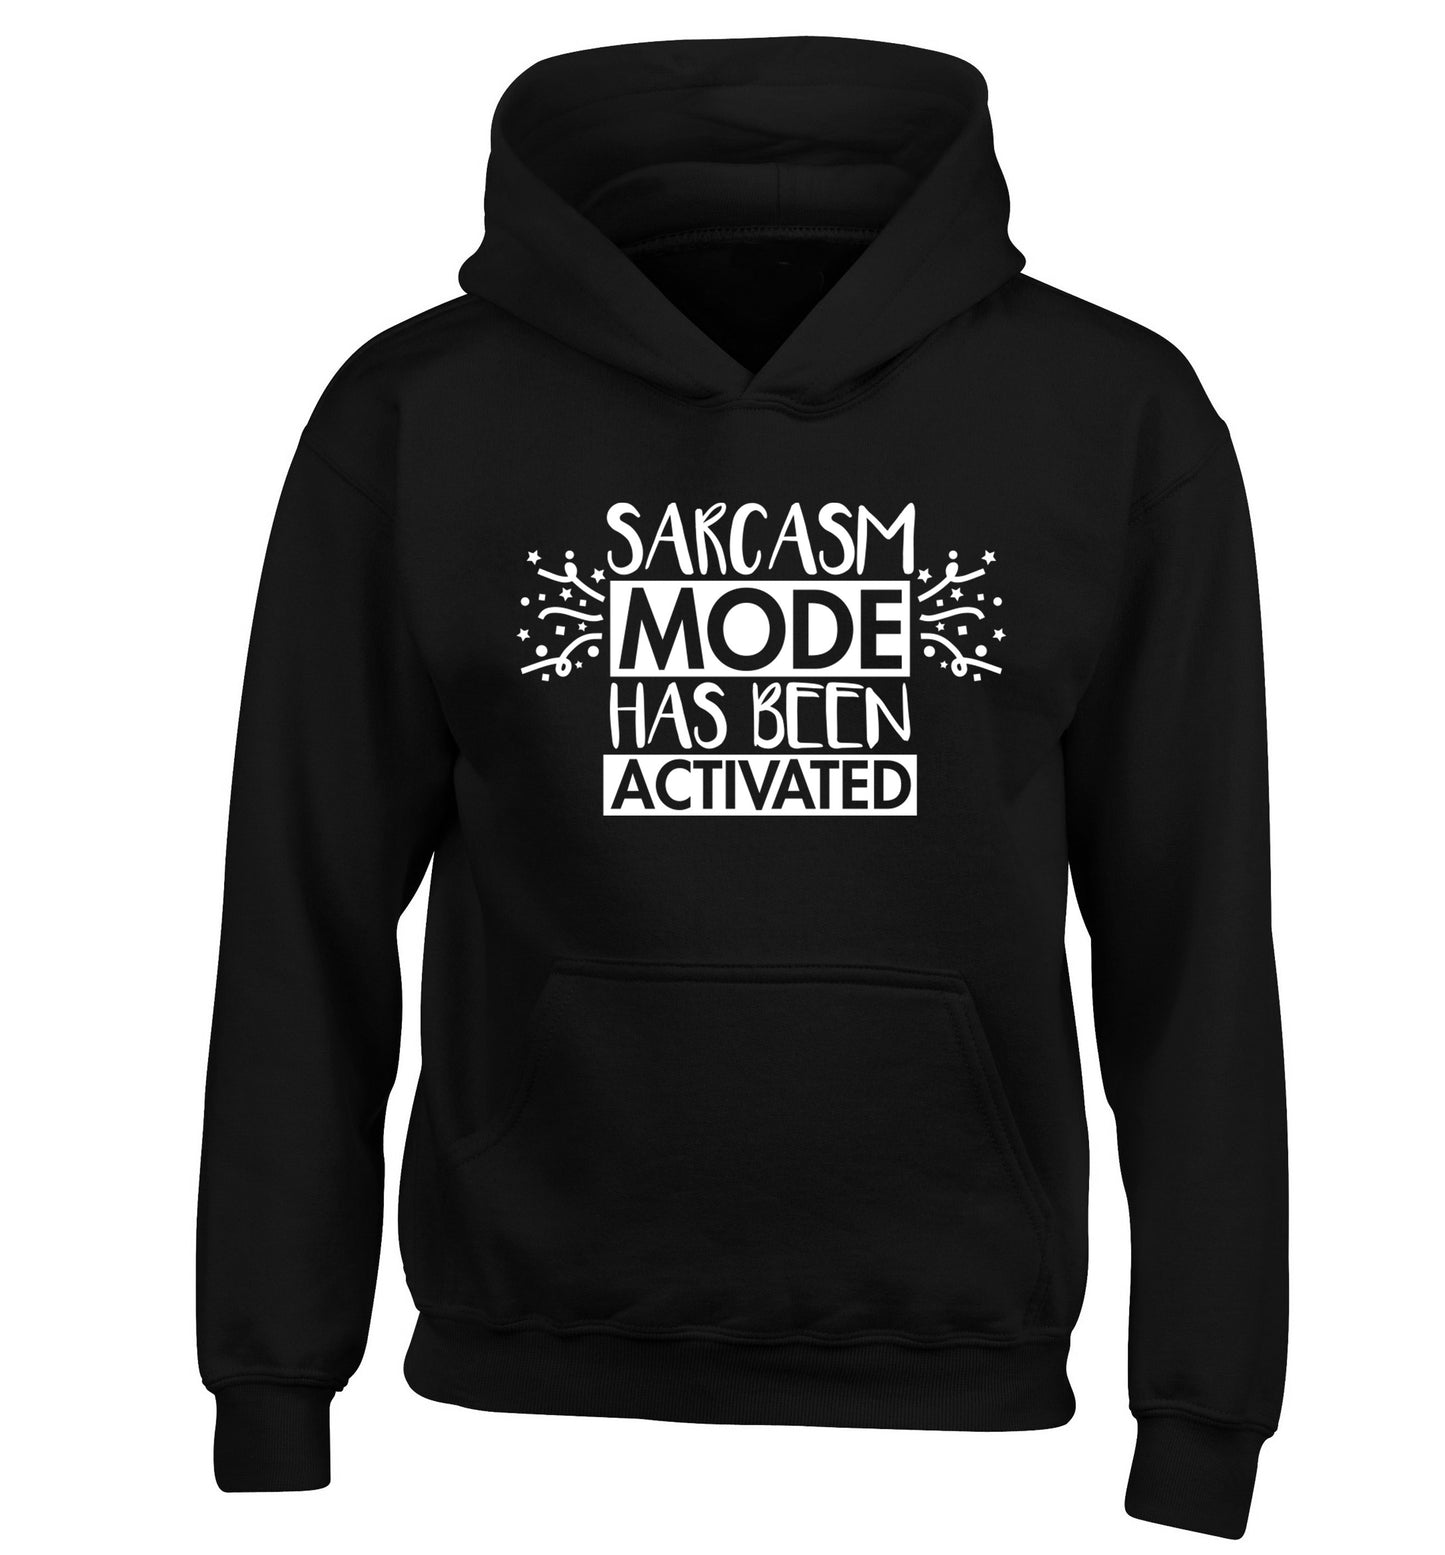 Sarcarsm mode has been activated children's black hoodie 12-14 Years